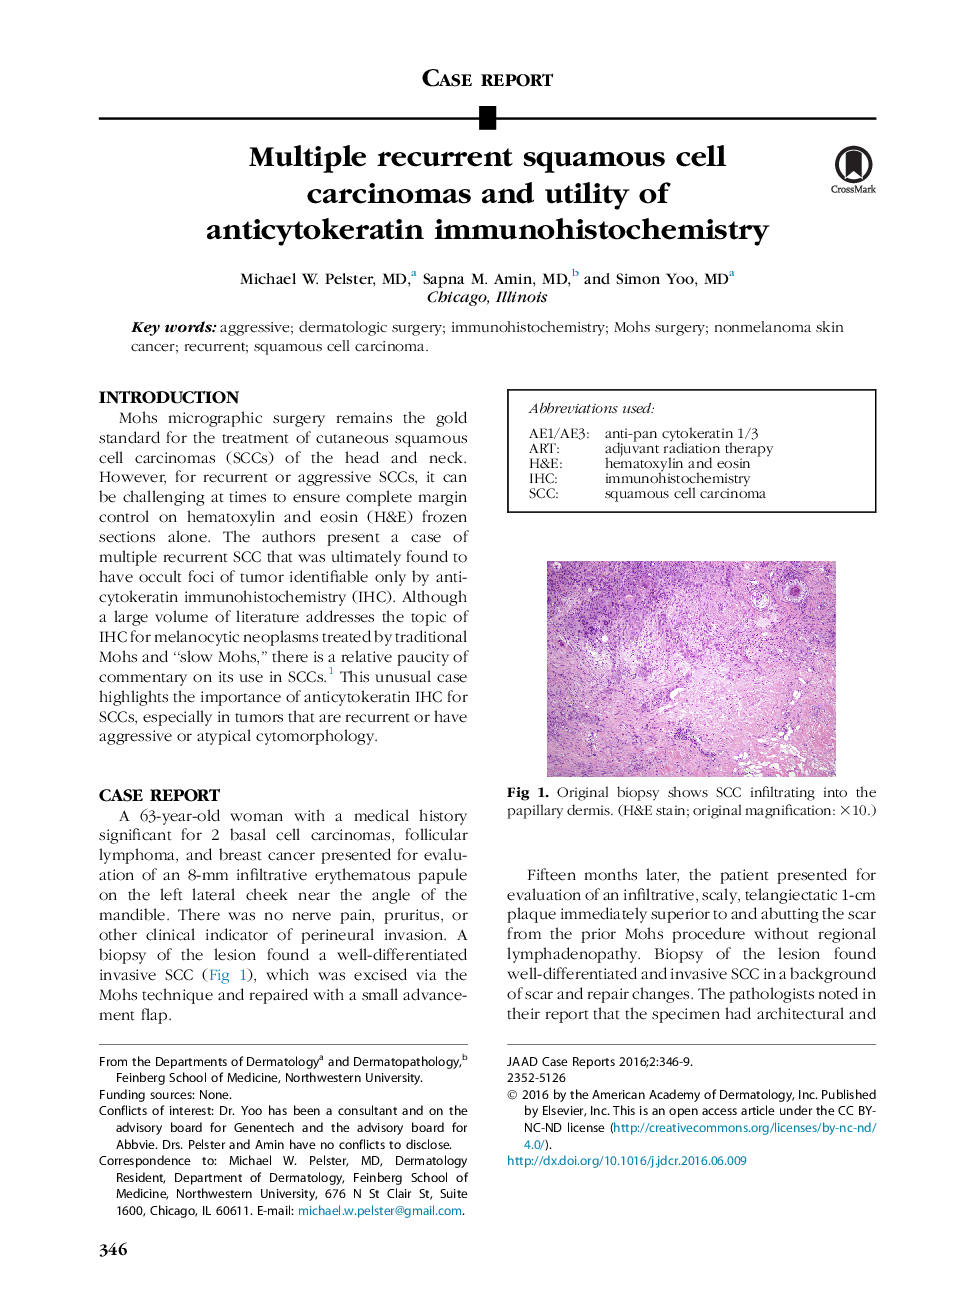 Multiple recurrent squamous cell carcinomas and utility of anticytokeratin immunohistochemistry